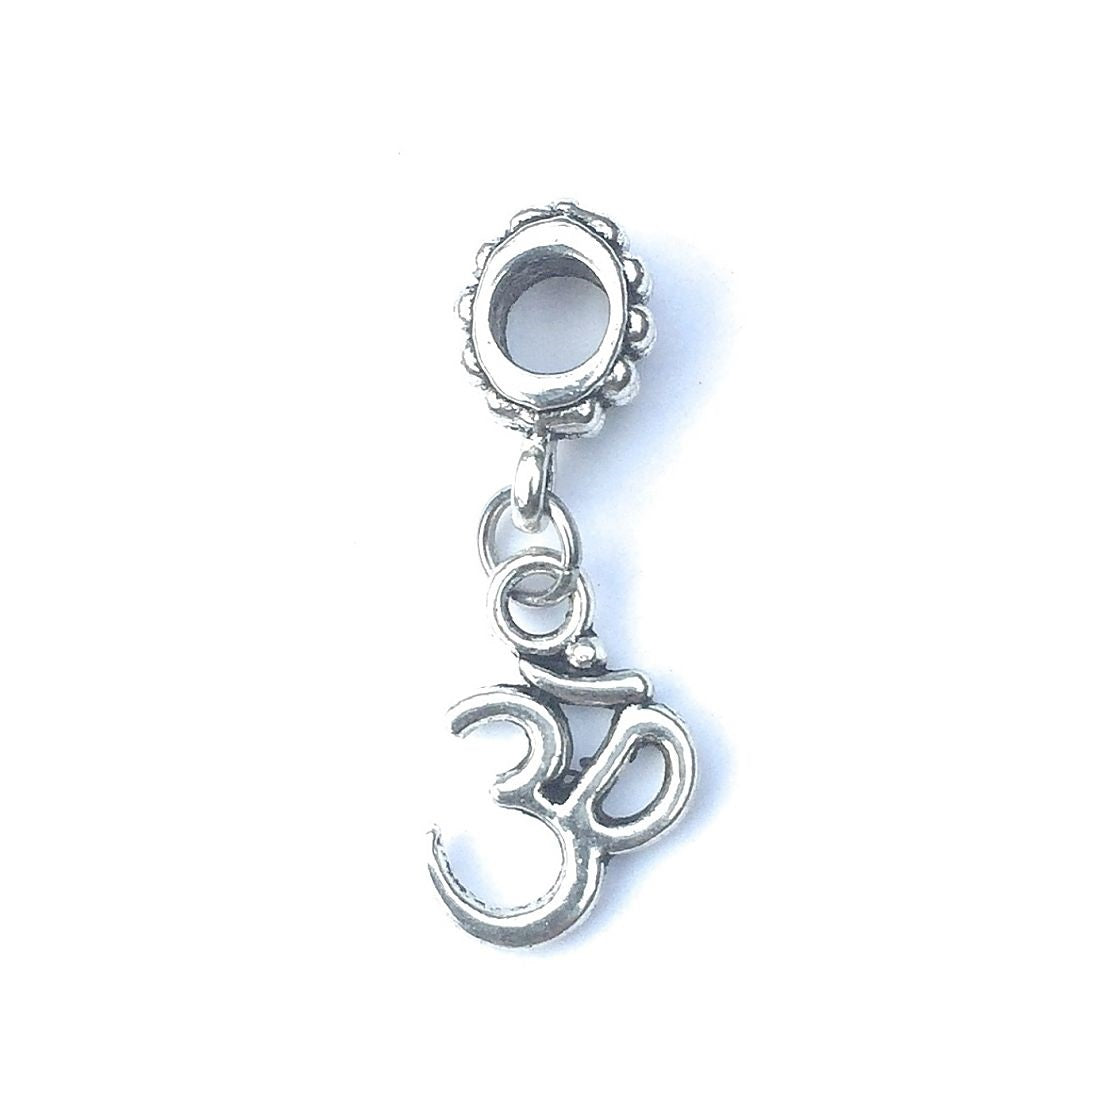 Handcrafted OM Yoga Charm Bead for Bracelet.